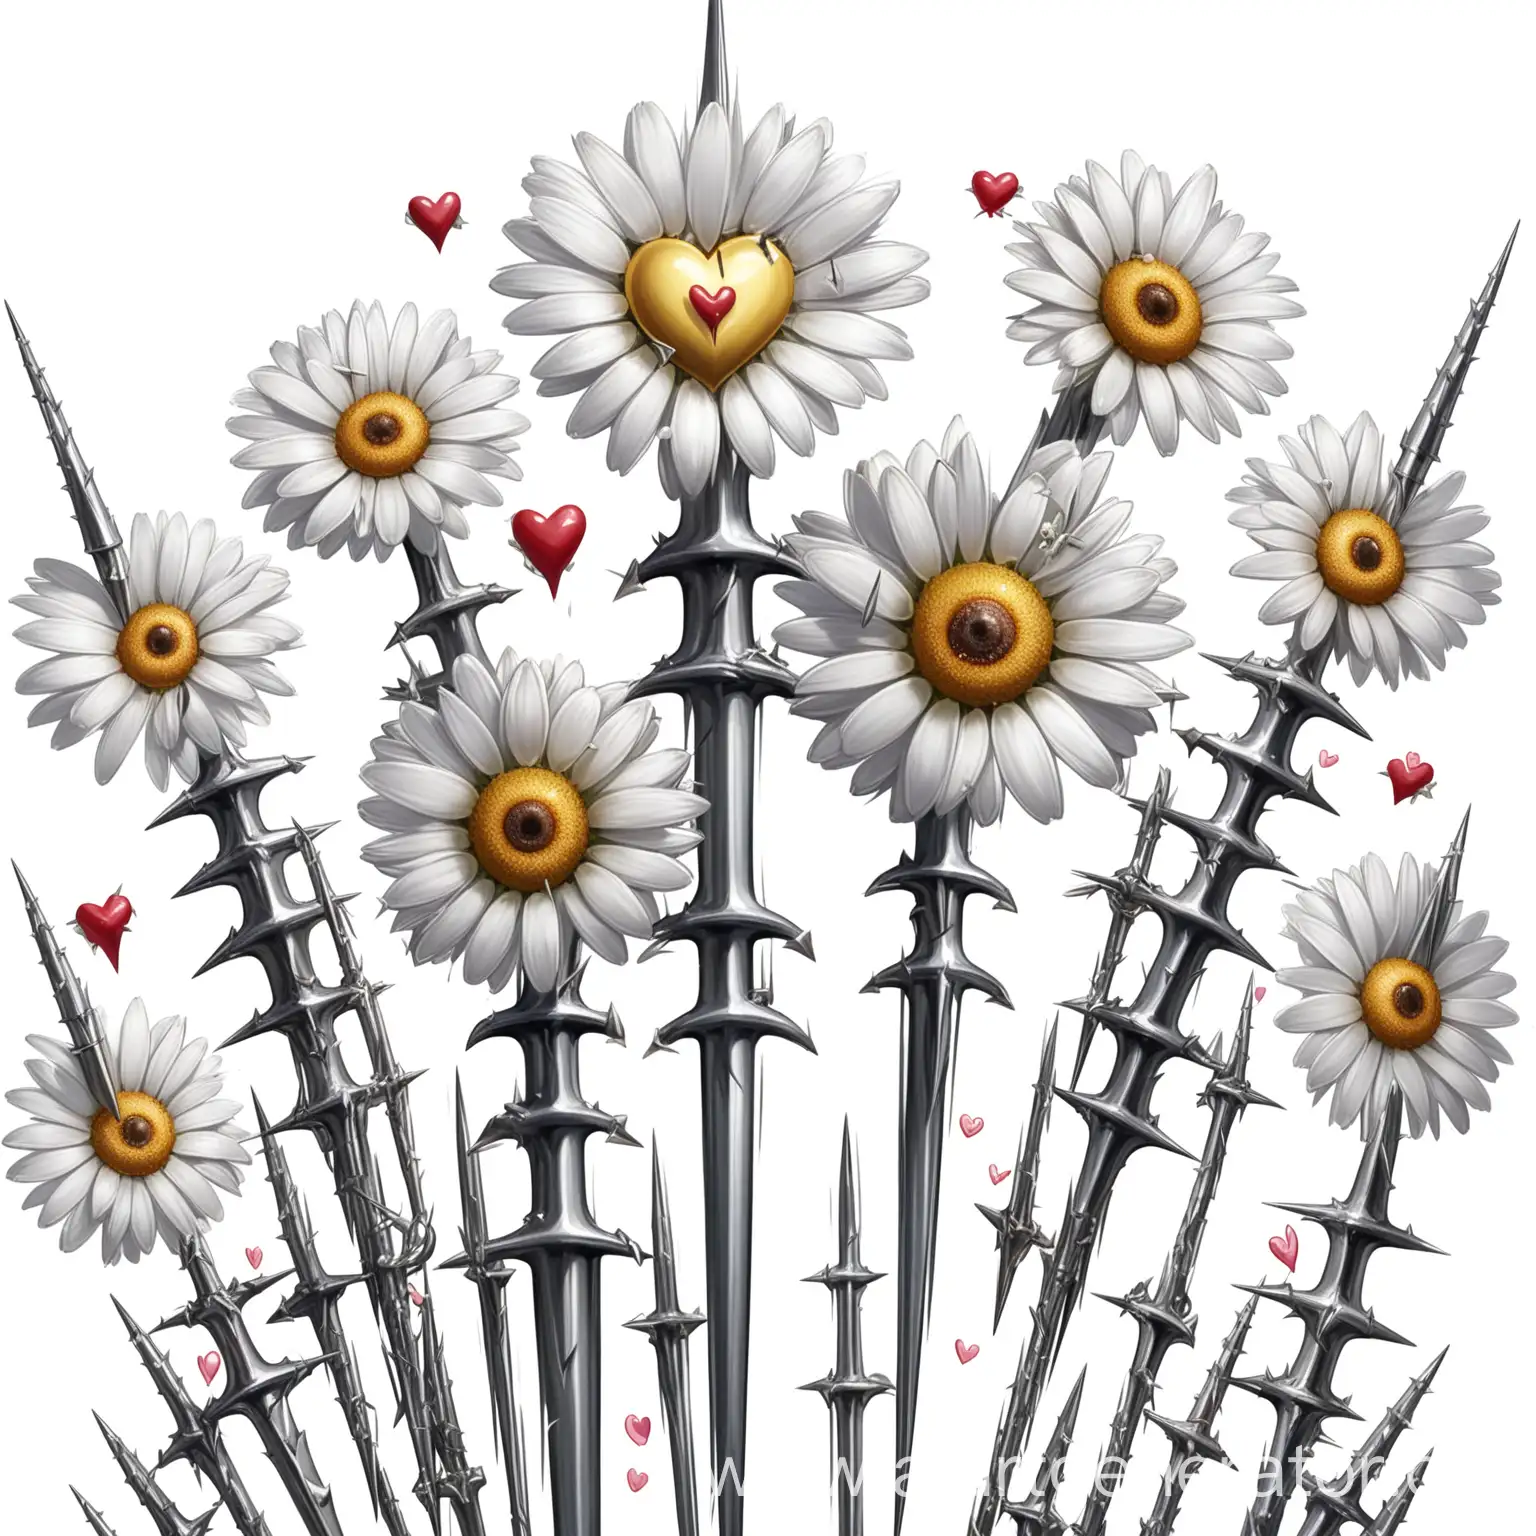 Daisy-Hearts-on-Metal-Spikes-Artwork